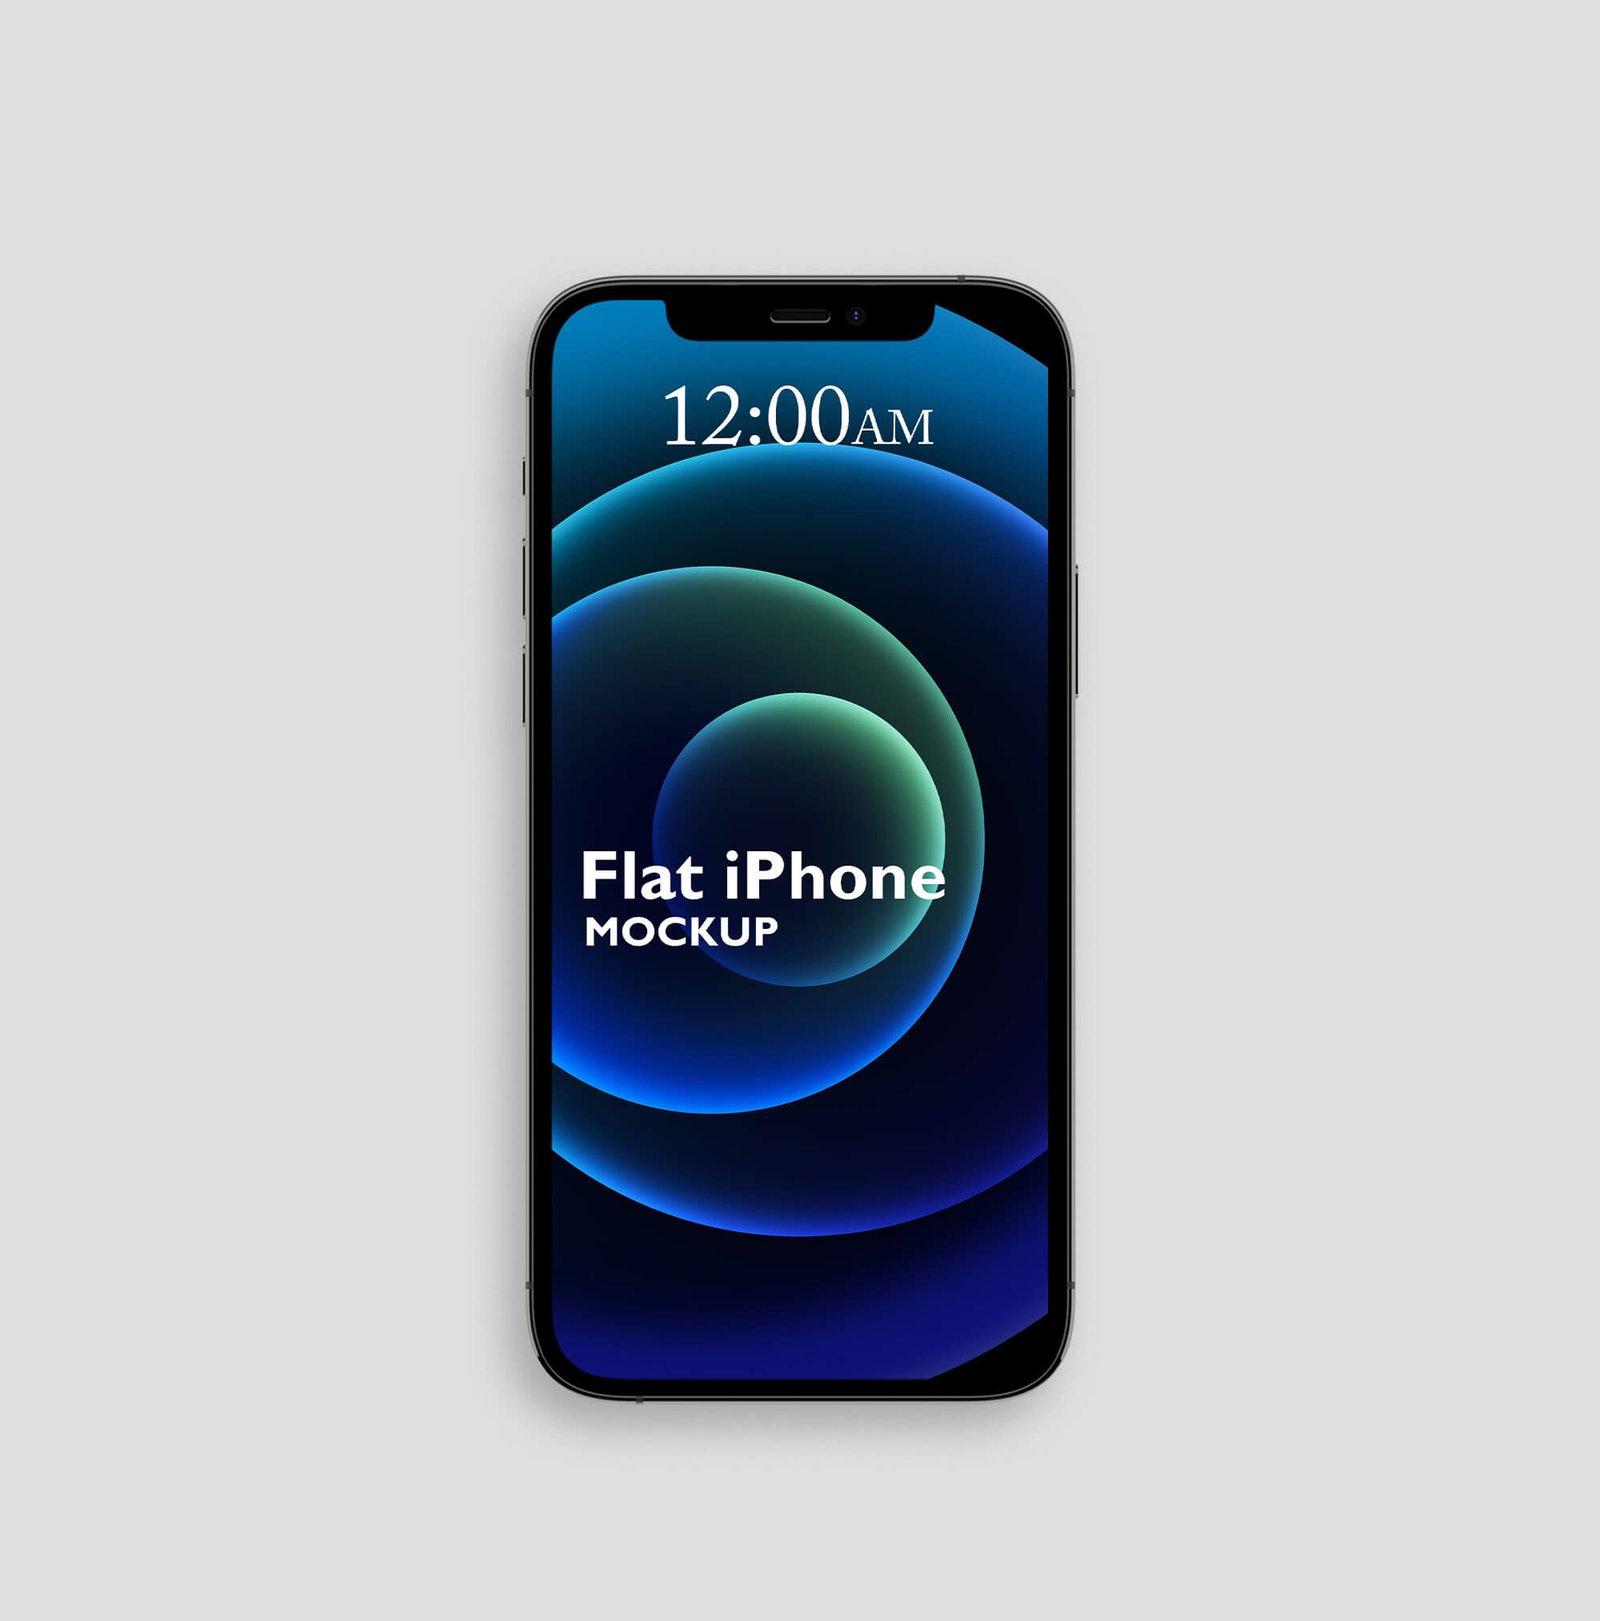 Design Free Flat iPhone Mockup PSD Template